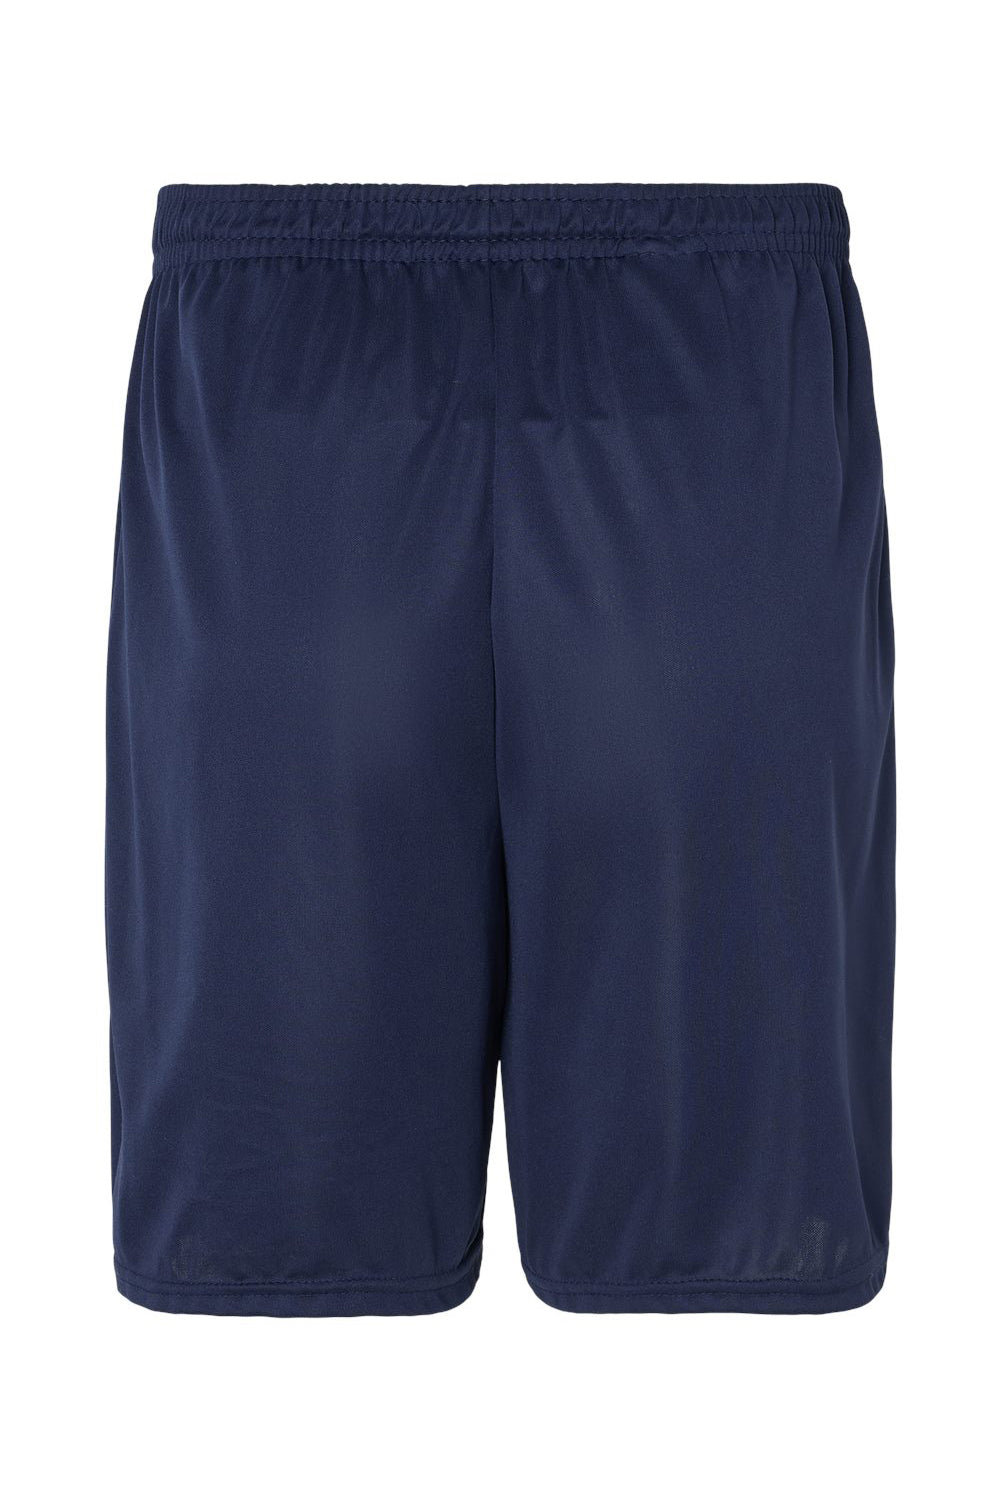 Augusta Sportswear 1425 Mens Octane Moisture Wicking Shorts Navy Blue Flat Back